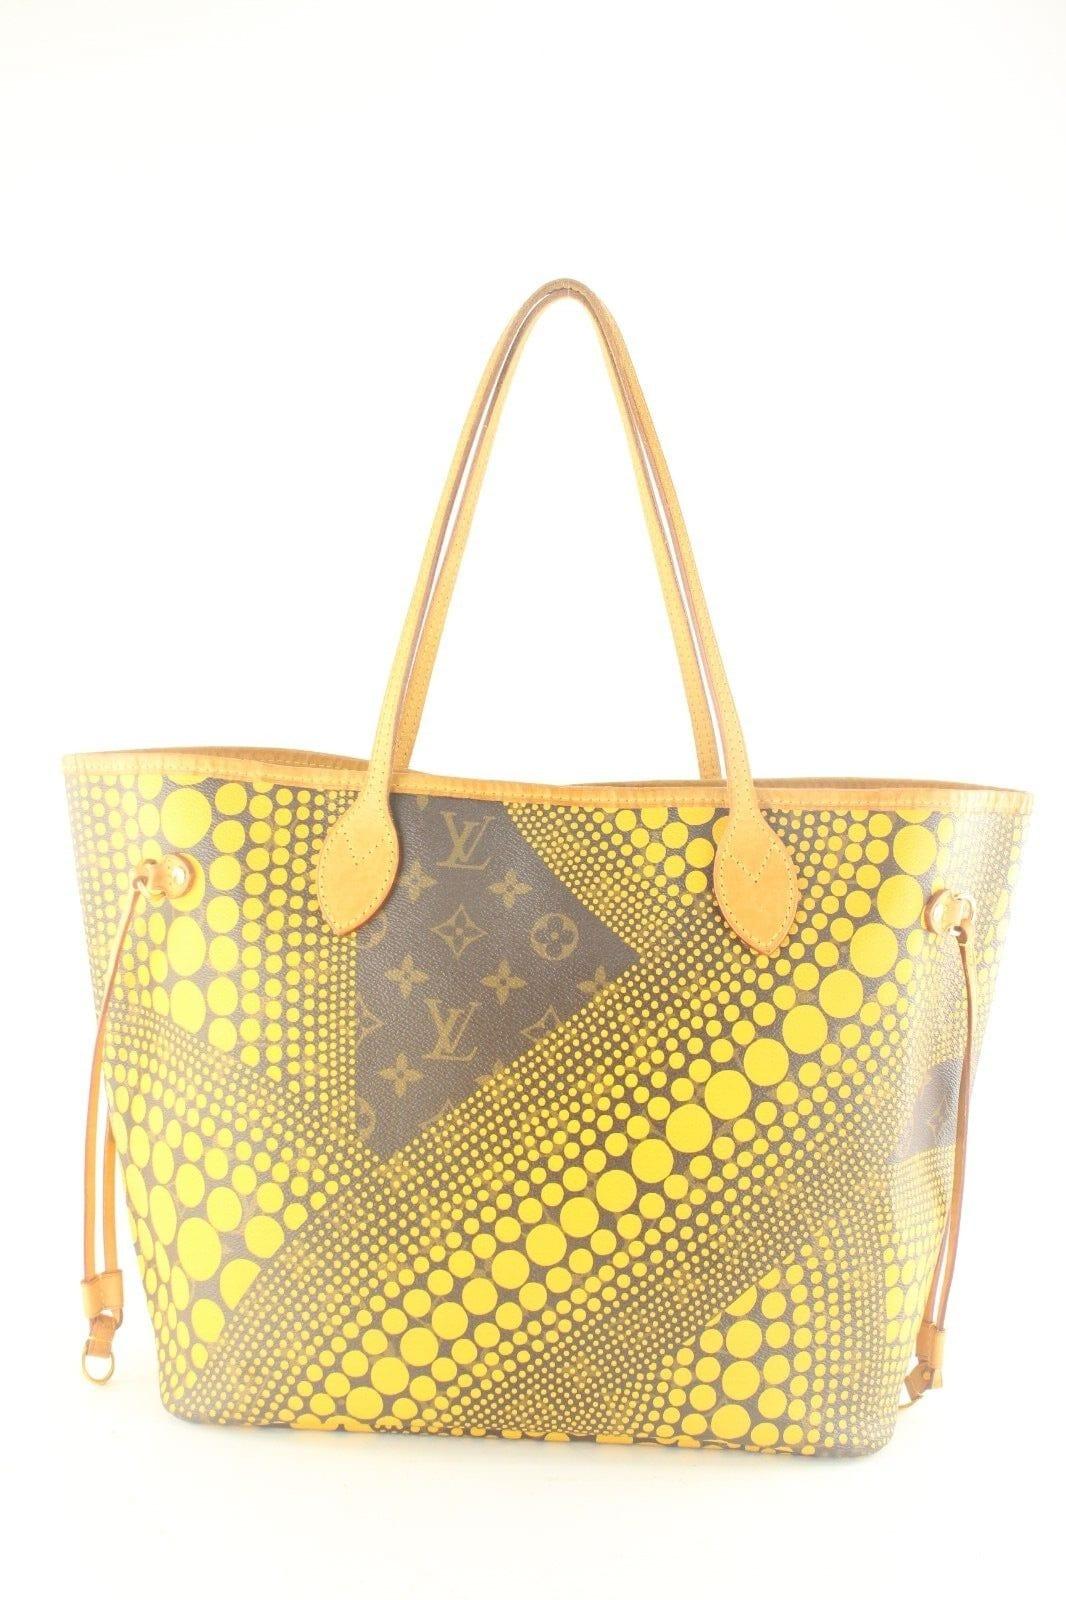 Women's LOUIS VUITTON Monogram Yayoi Kusama Waves Neverfull MM Yellow Tote Bag 3LK1113K For Sale